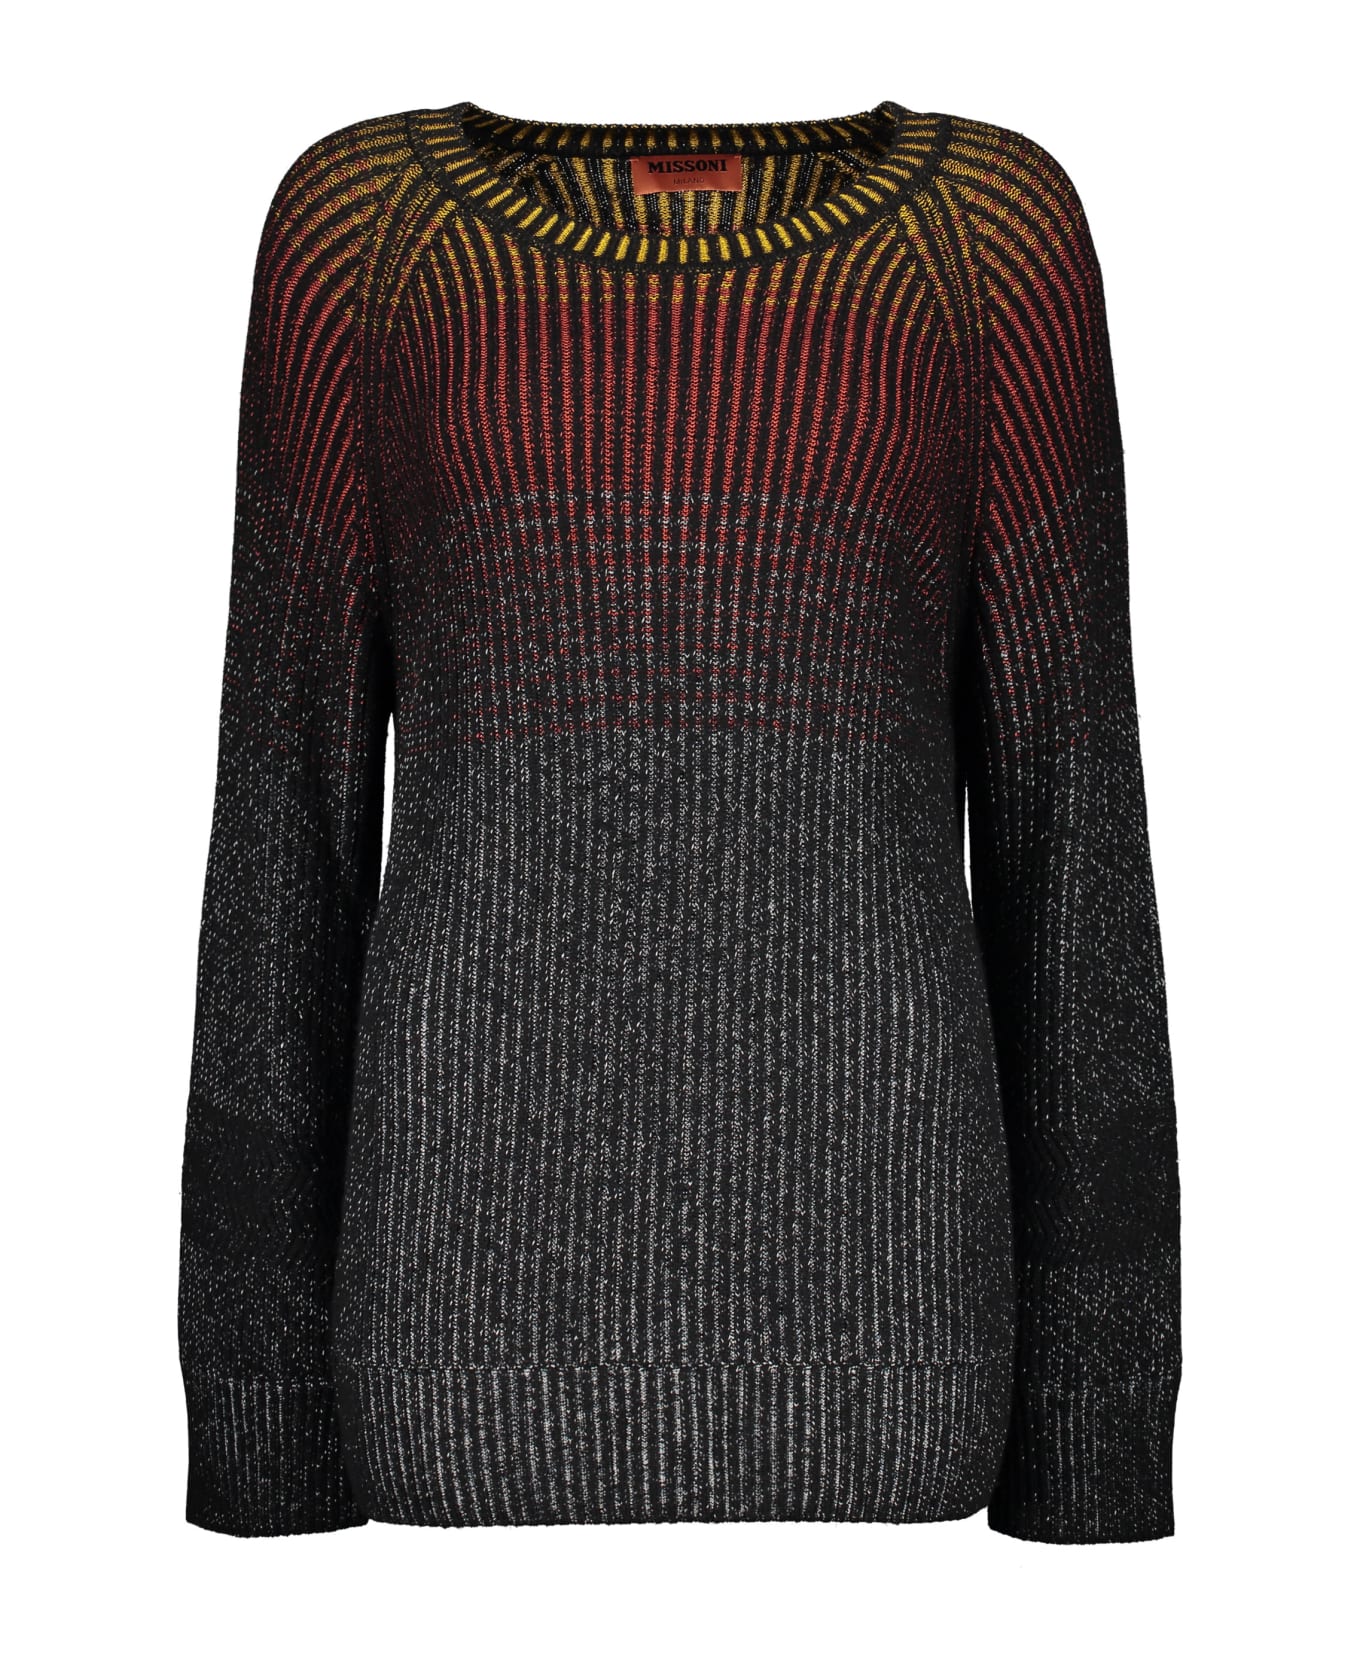 Missoni Wool-blend Crew-neck Sweater - Multicolor